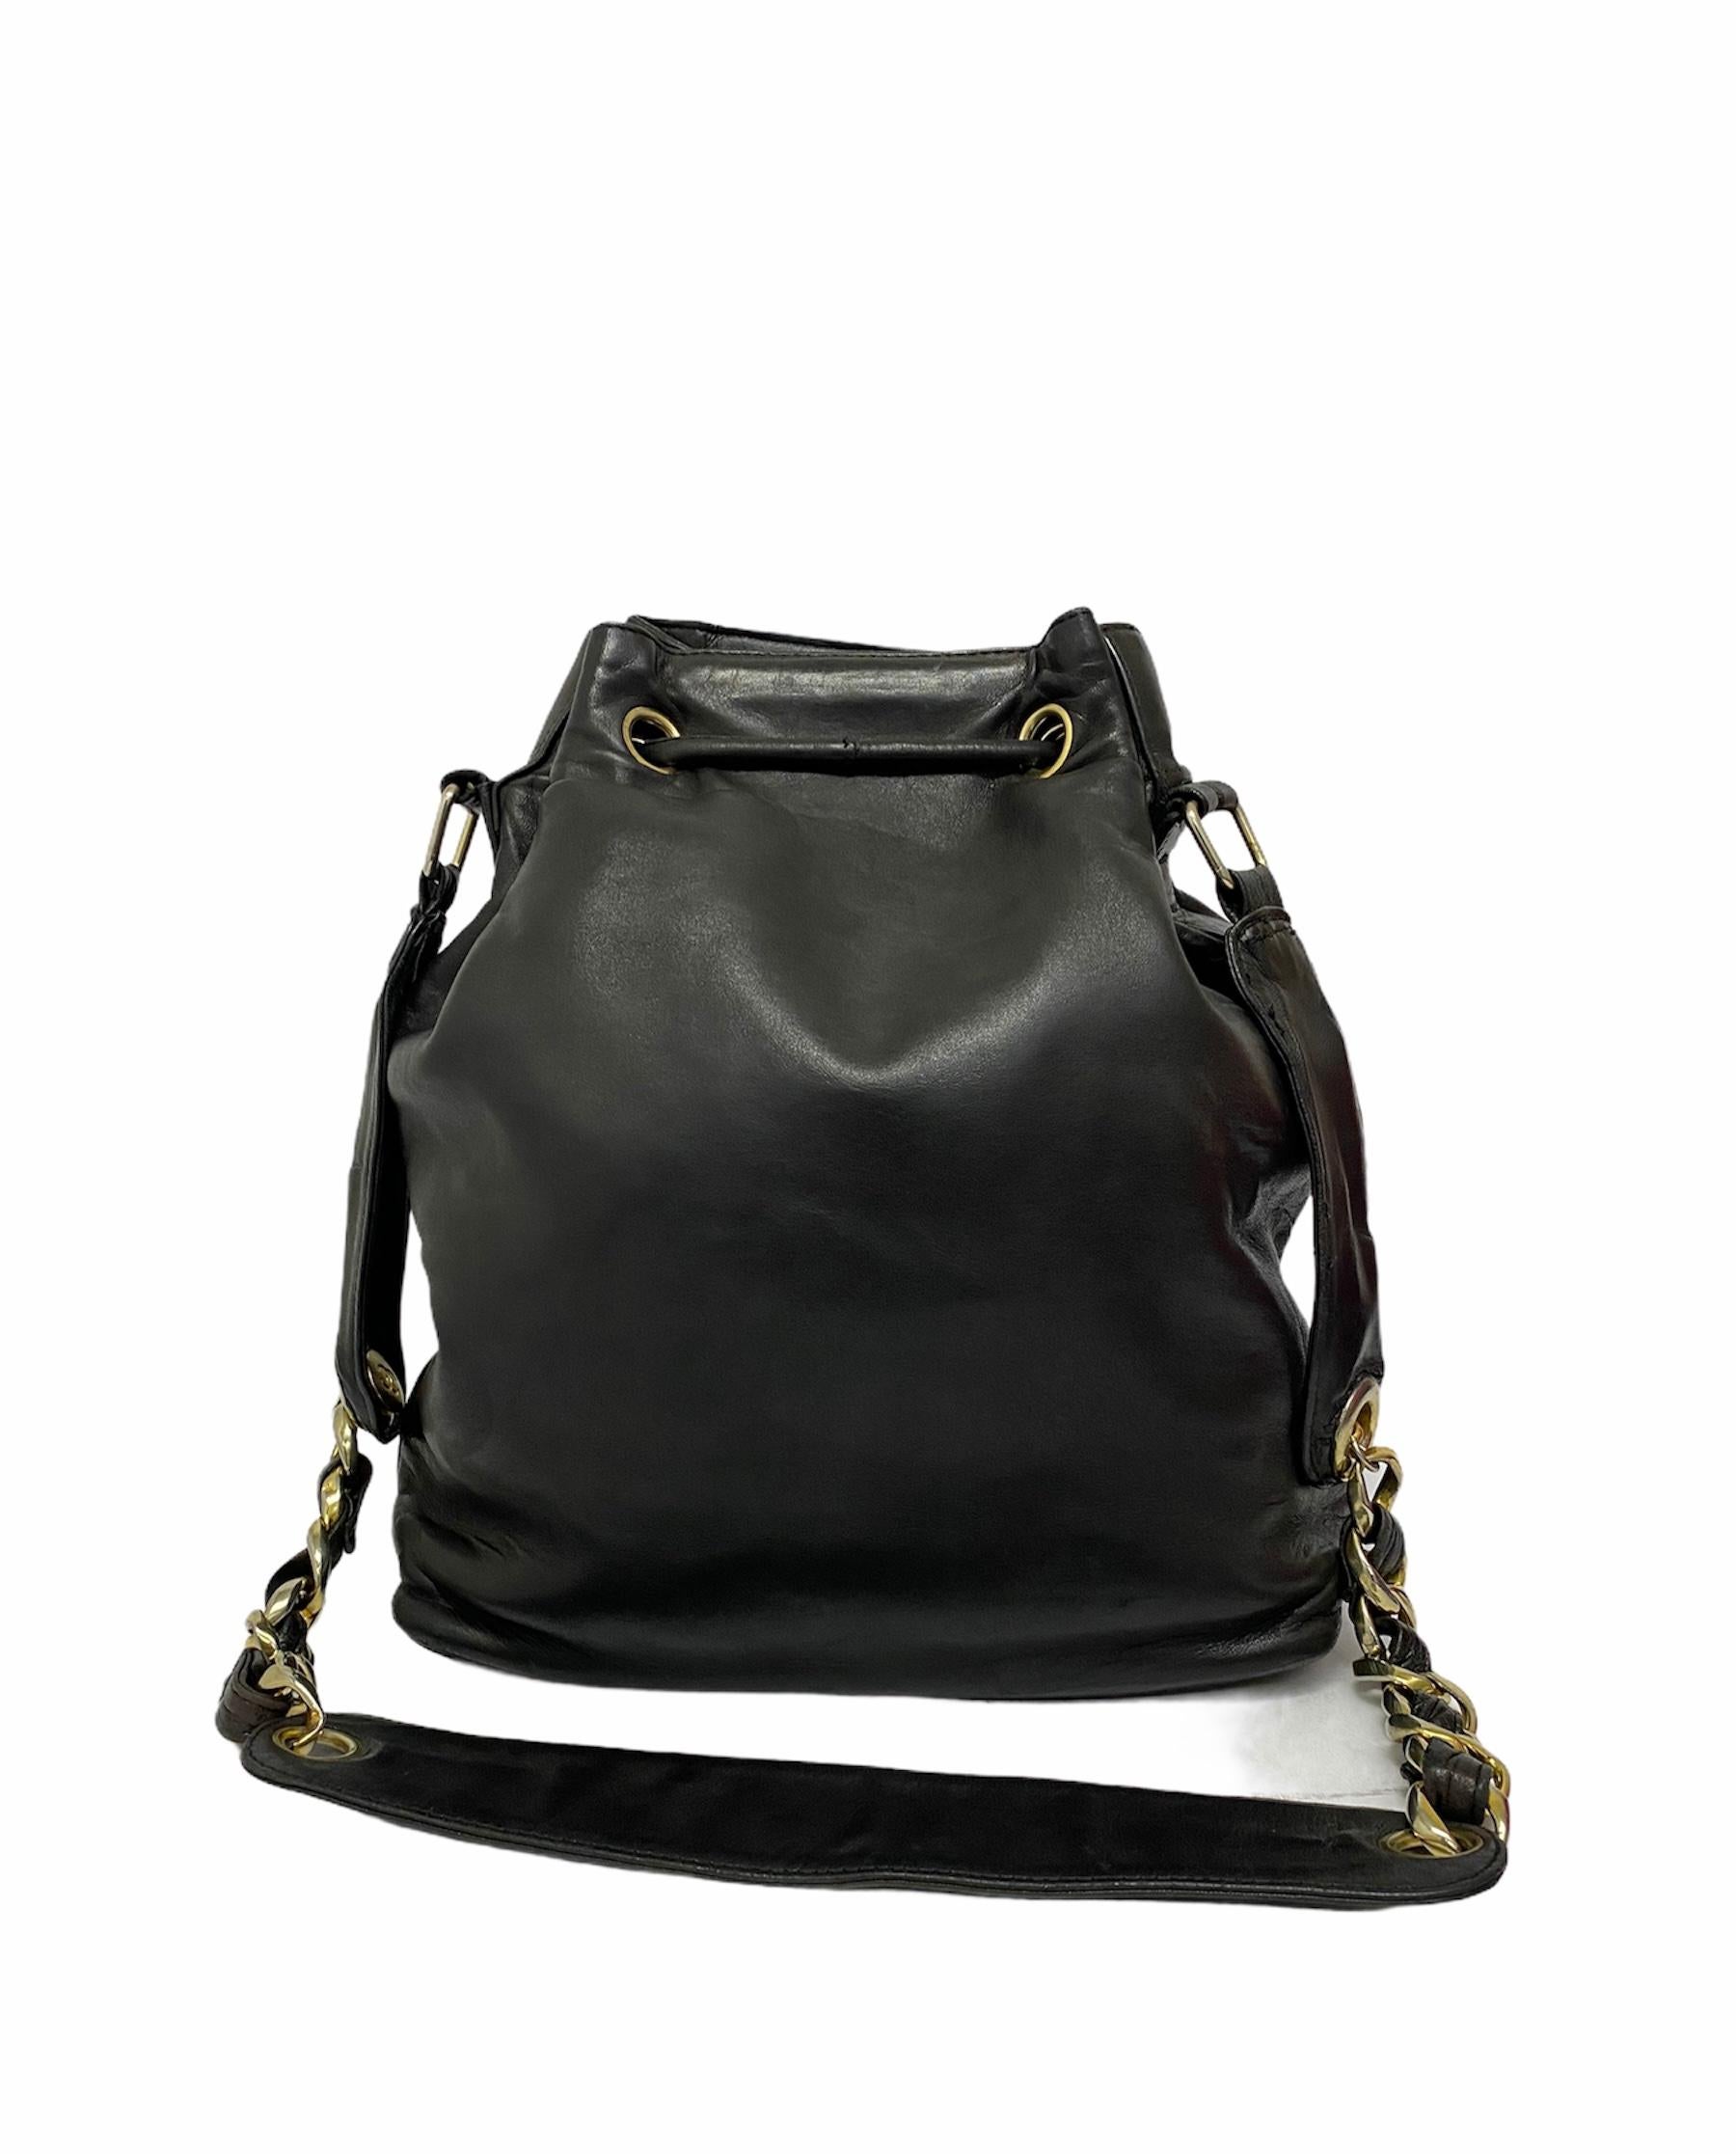 Chanel Vintage Bucket Bag in Black Leather with Golden Hardware 1